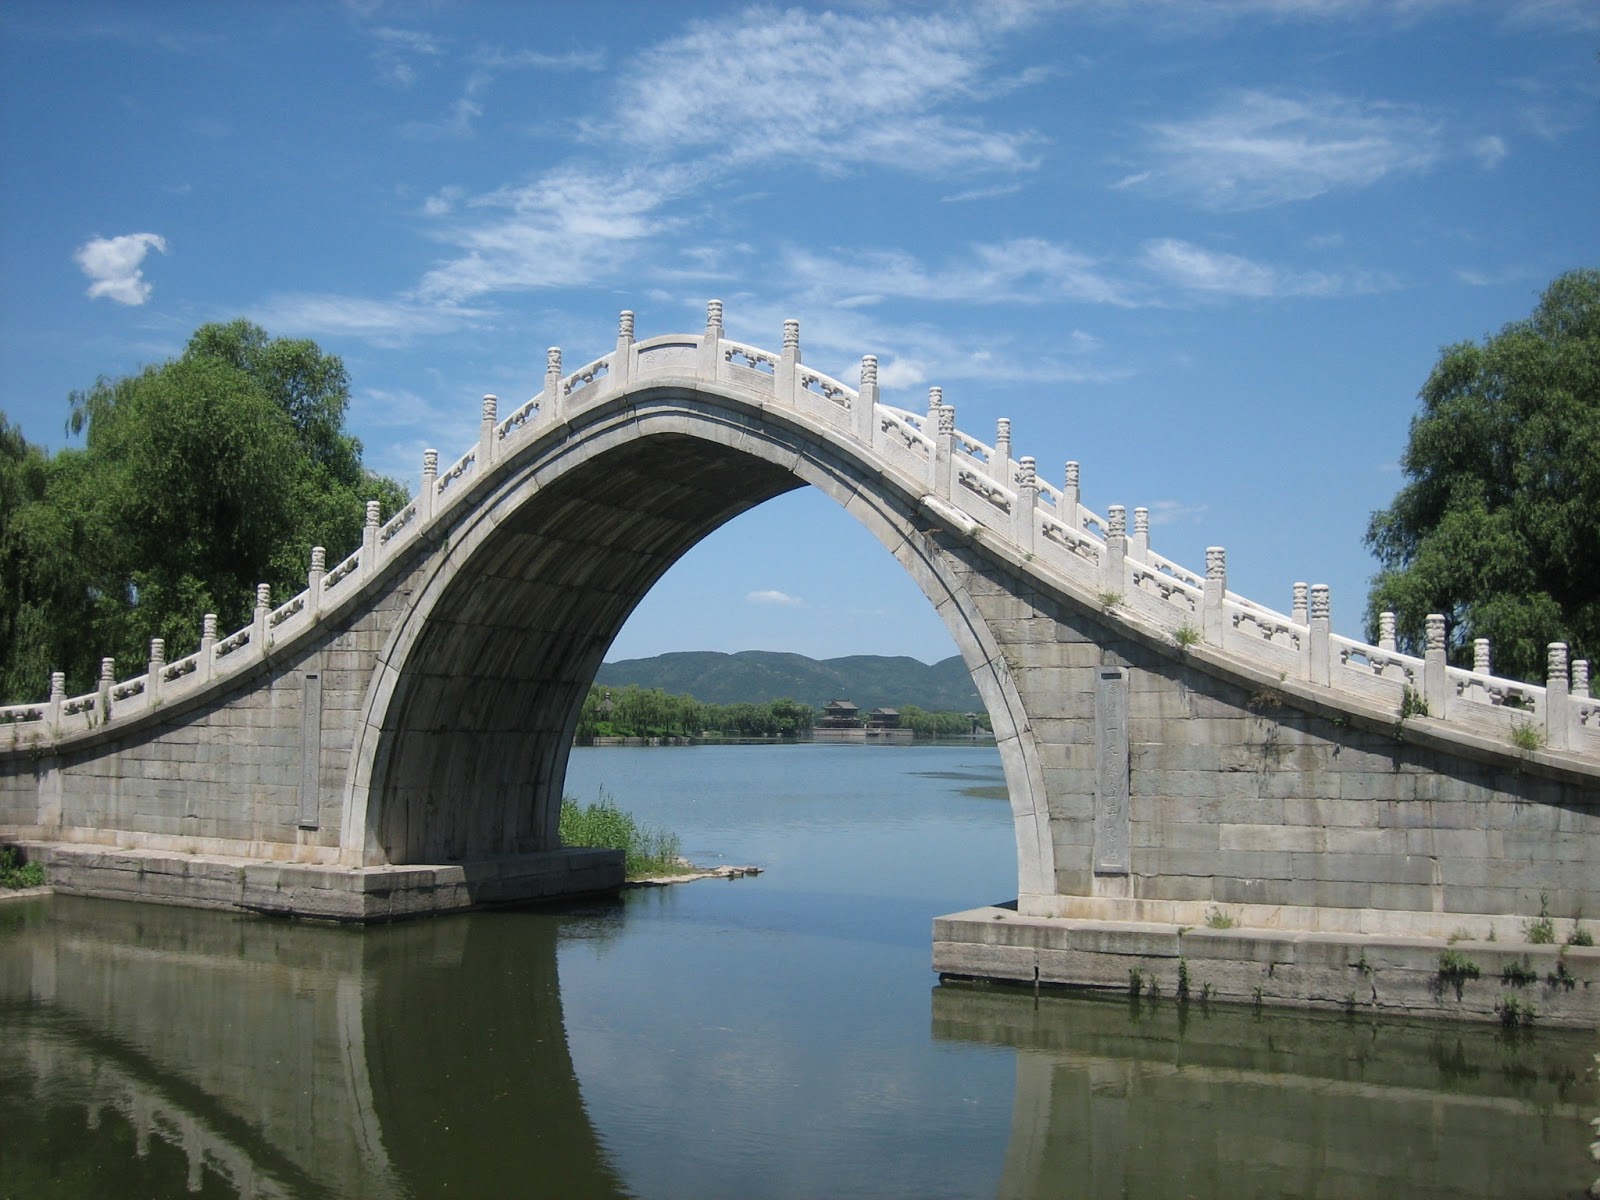 The Old Bridge - Hubert Robert作品,无水印高清图 - 麦田艺术